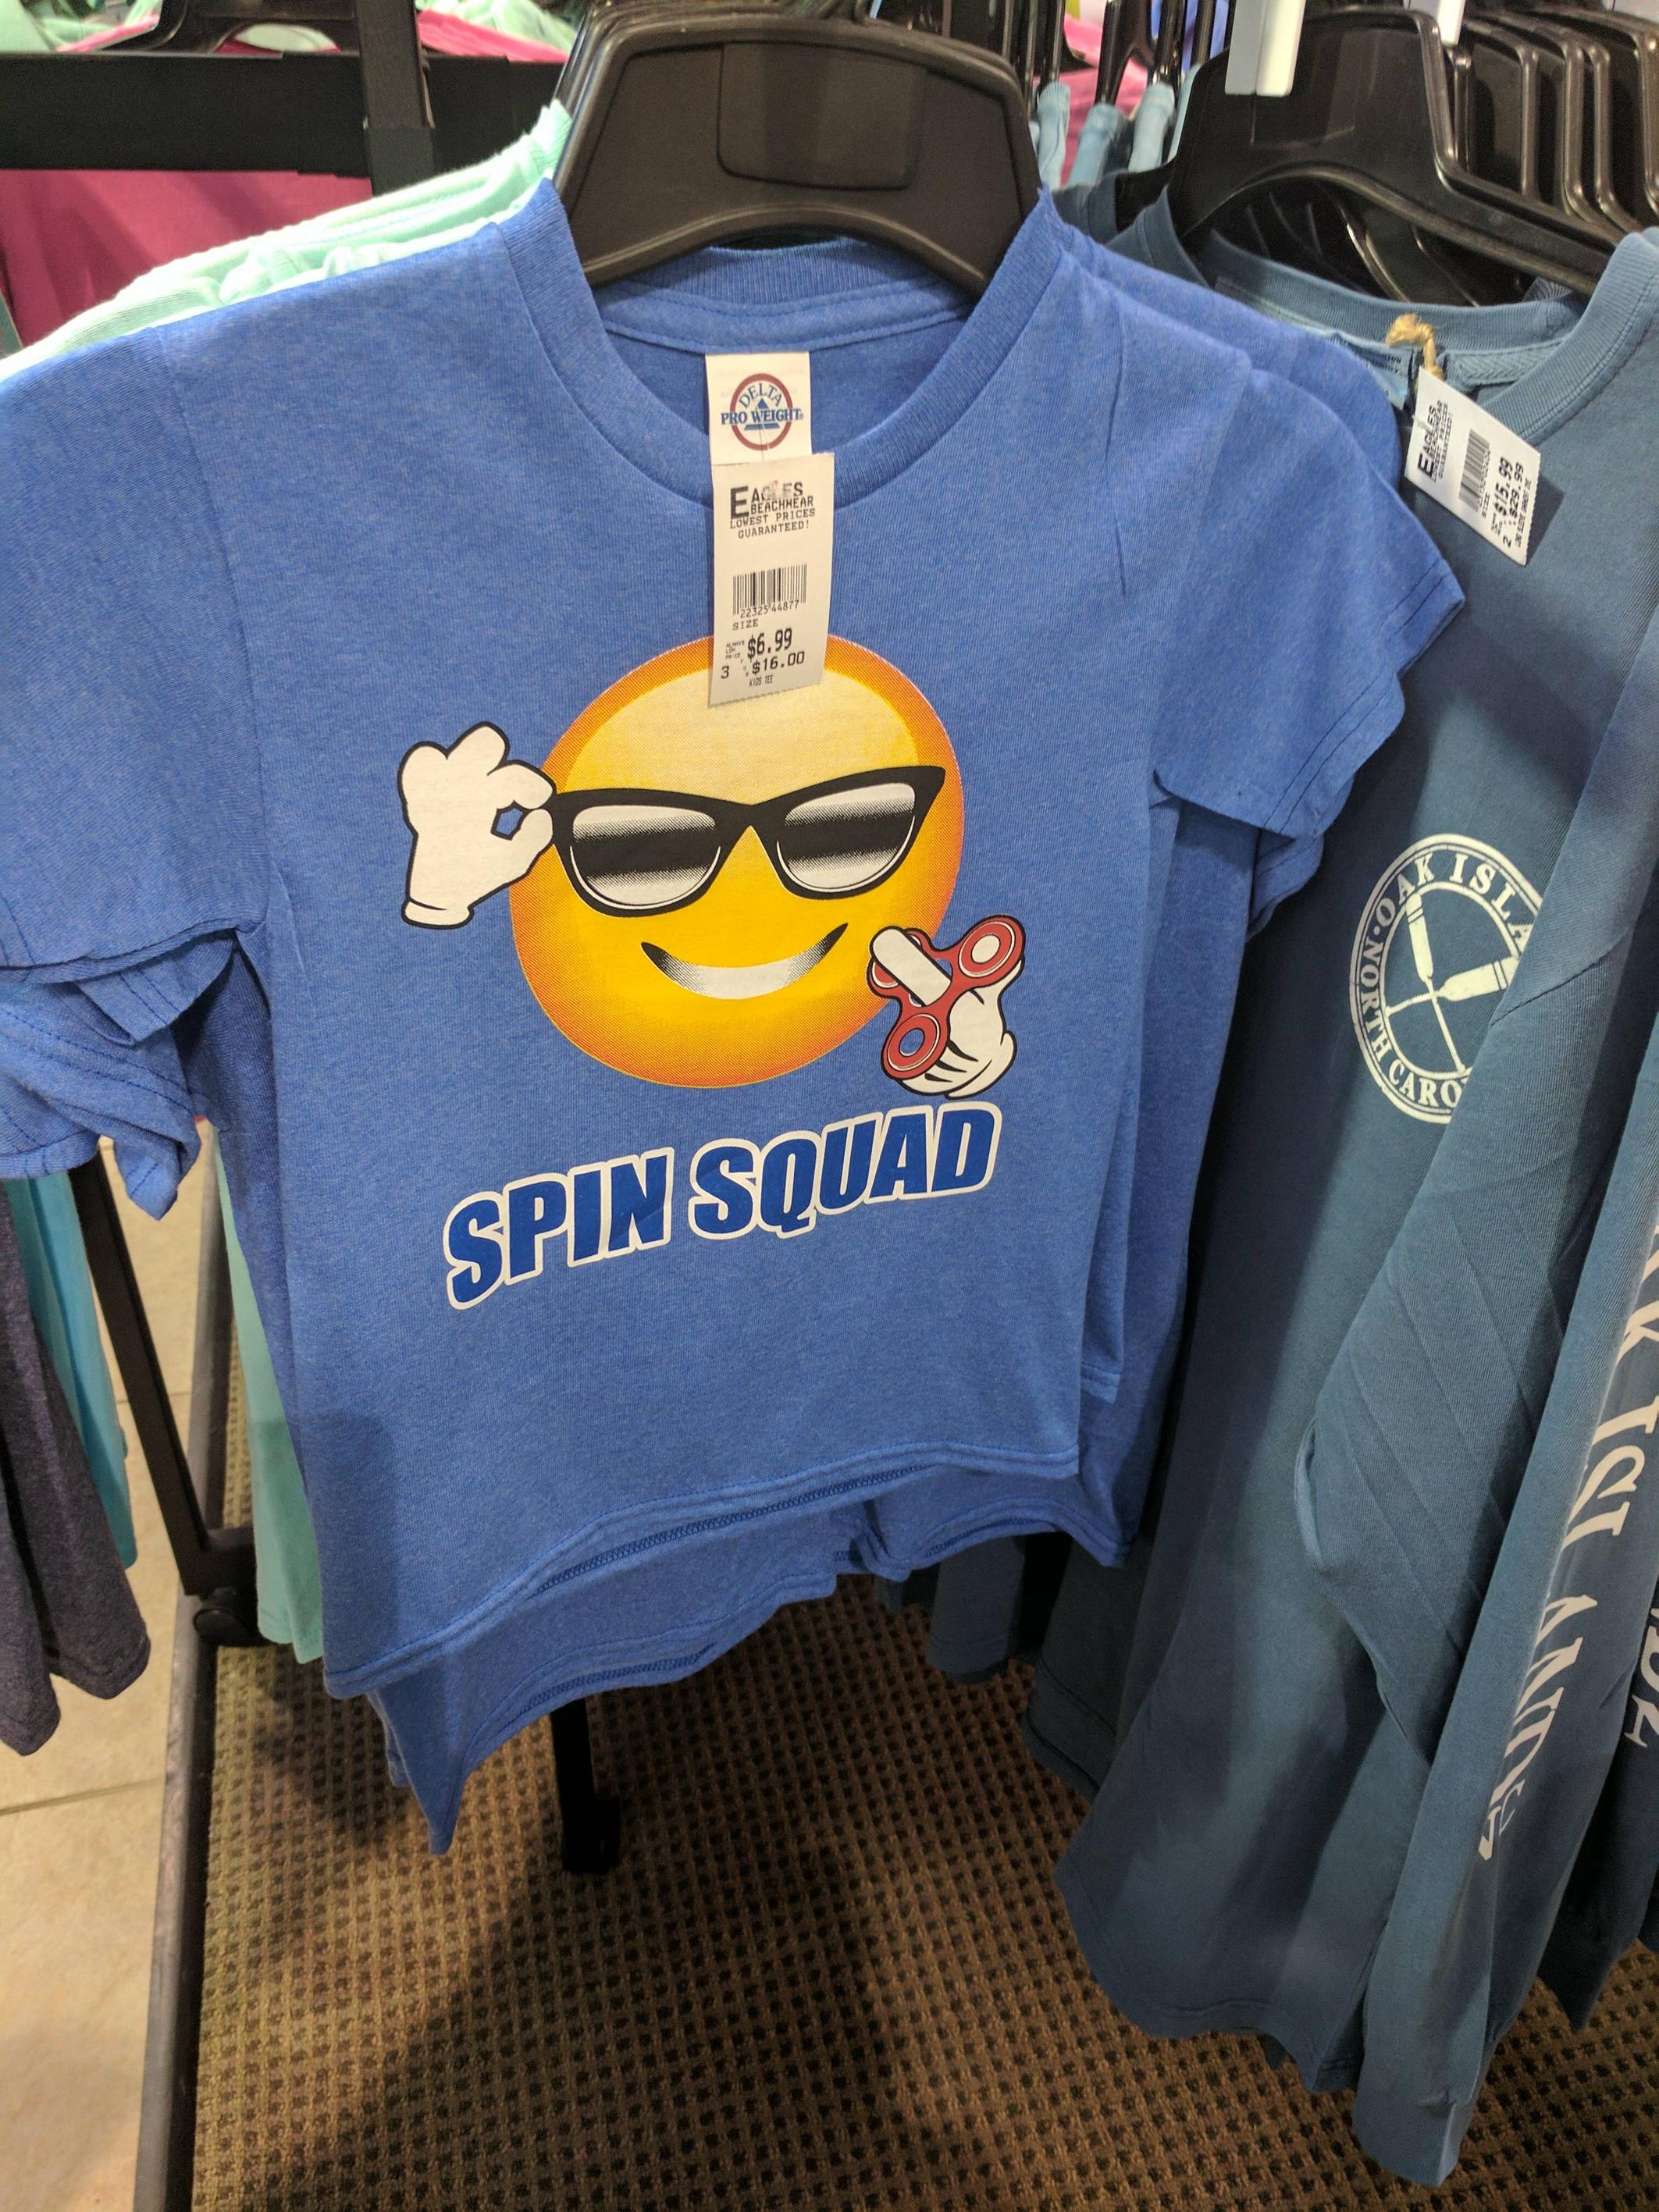 T-shirt of an emoji with sunglasses spinning a fidget spinner.